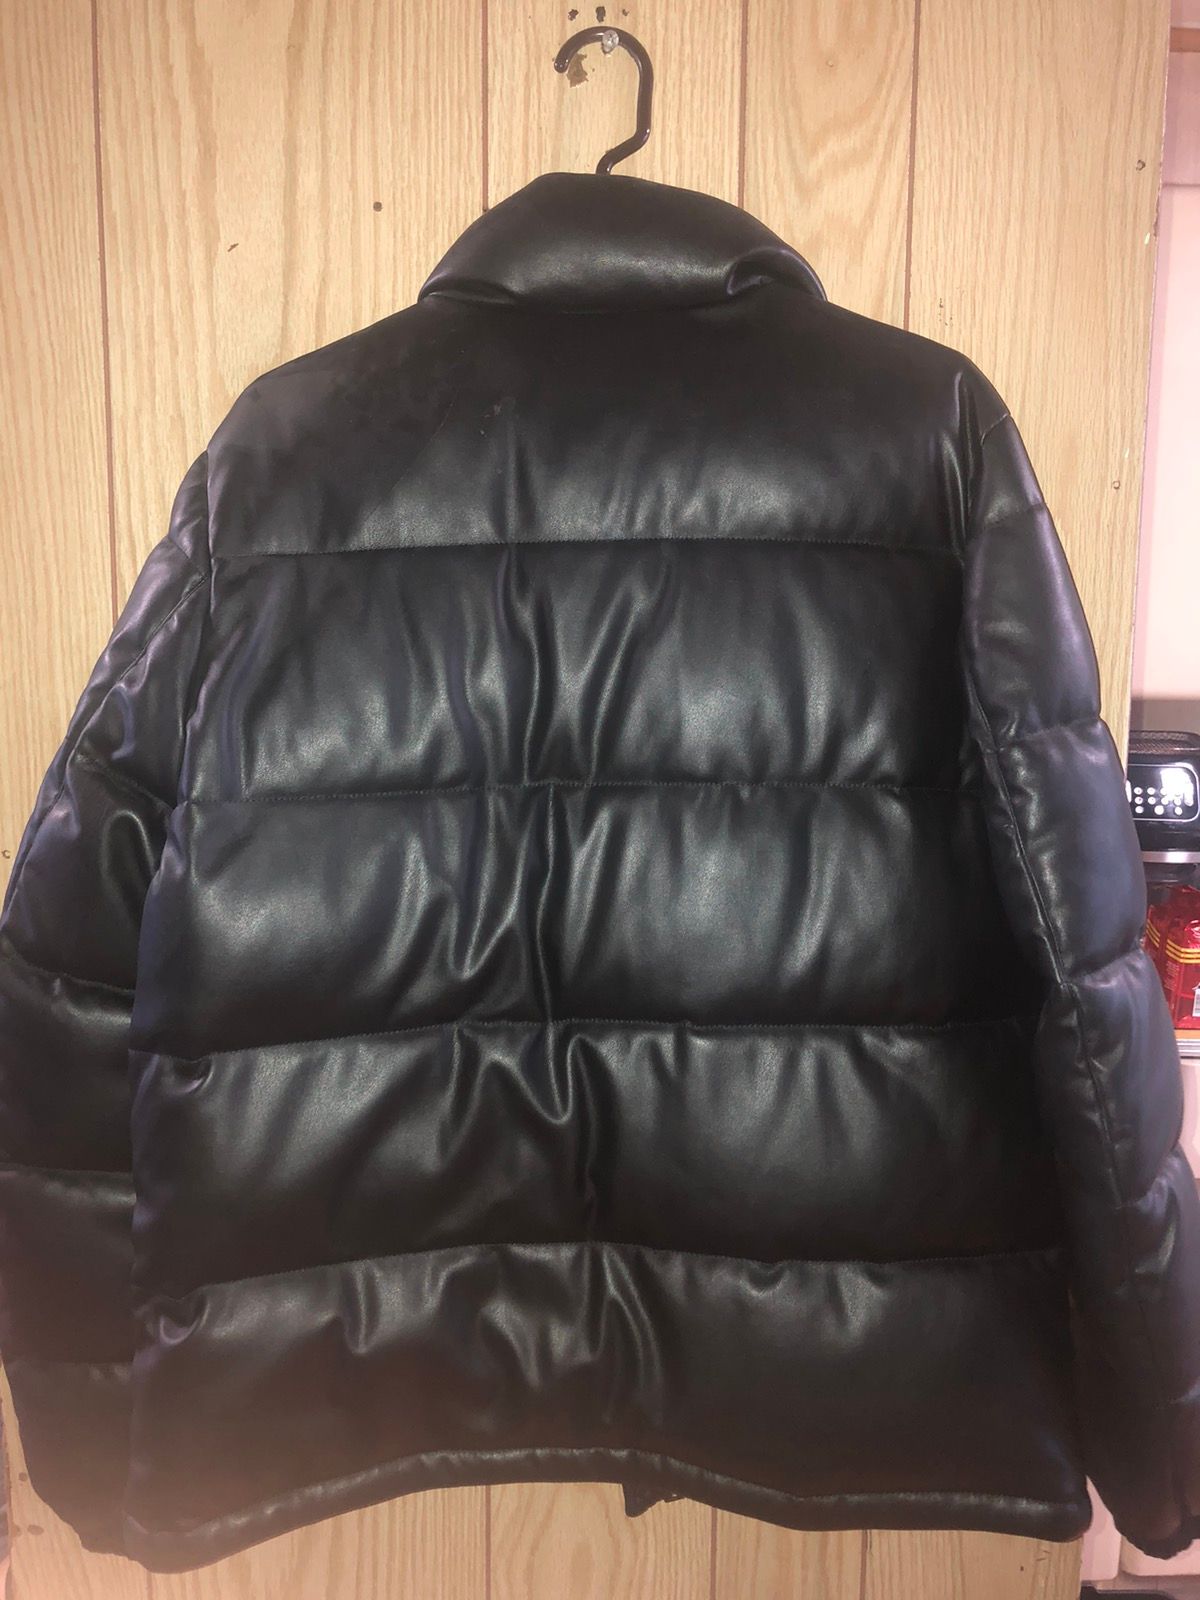 DKNY BKNY Black puffer jacket Size US S / EU 44-46 / 1 - 2 Preview